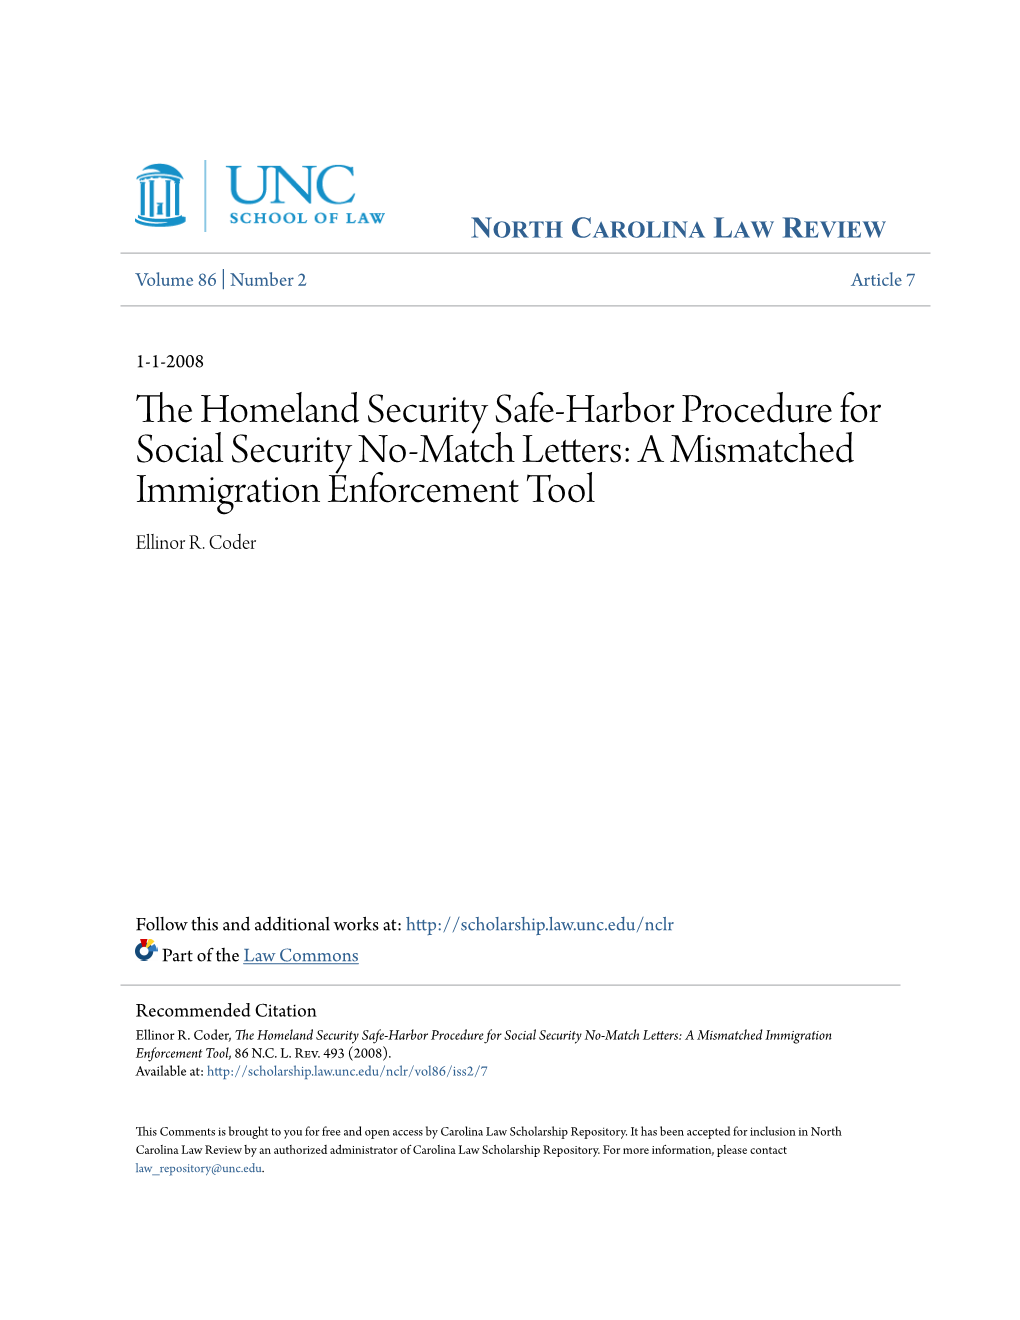 The Homeland Security Safe-Harbor Procedure for Social Security No-Match Letters: a Mismatched Immigration Enforcement Tool, 86 N.C